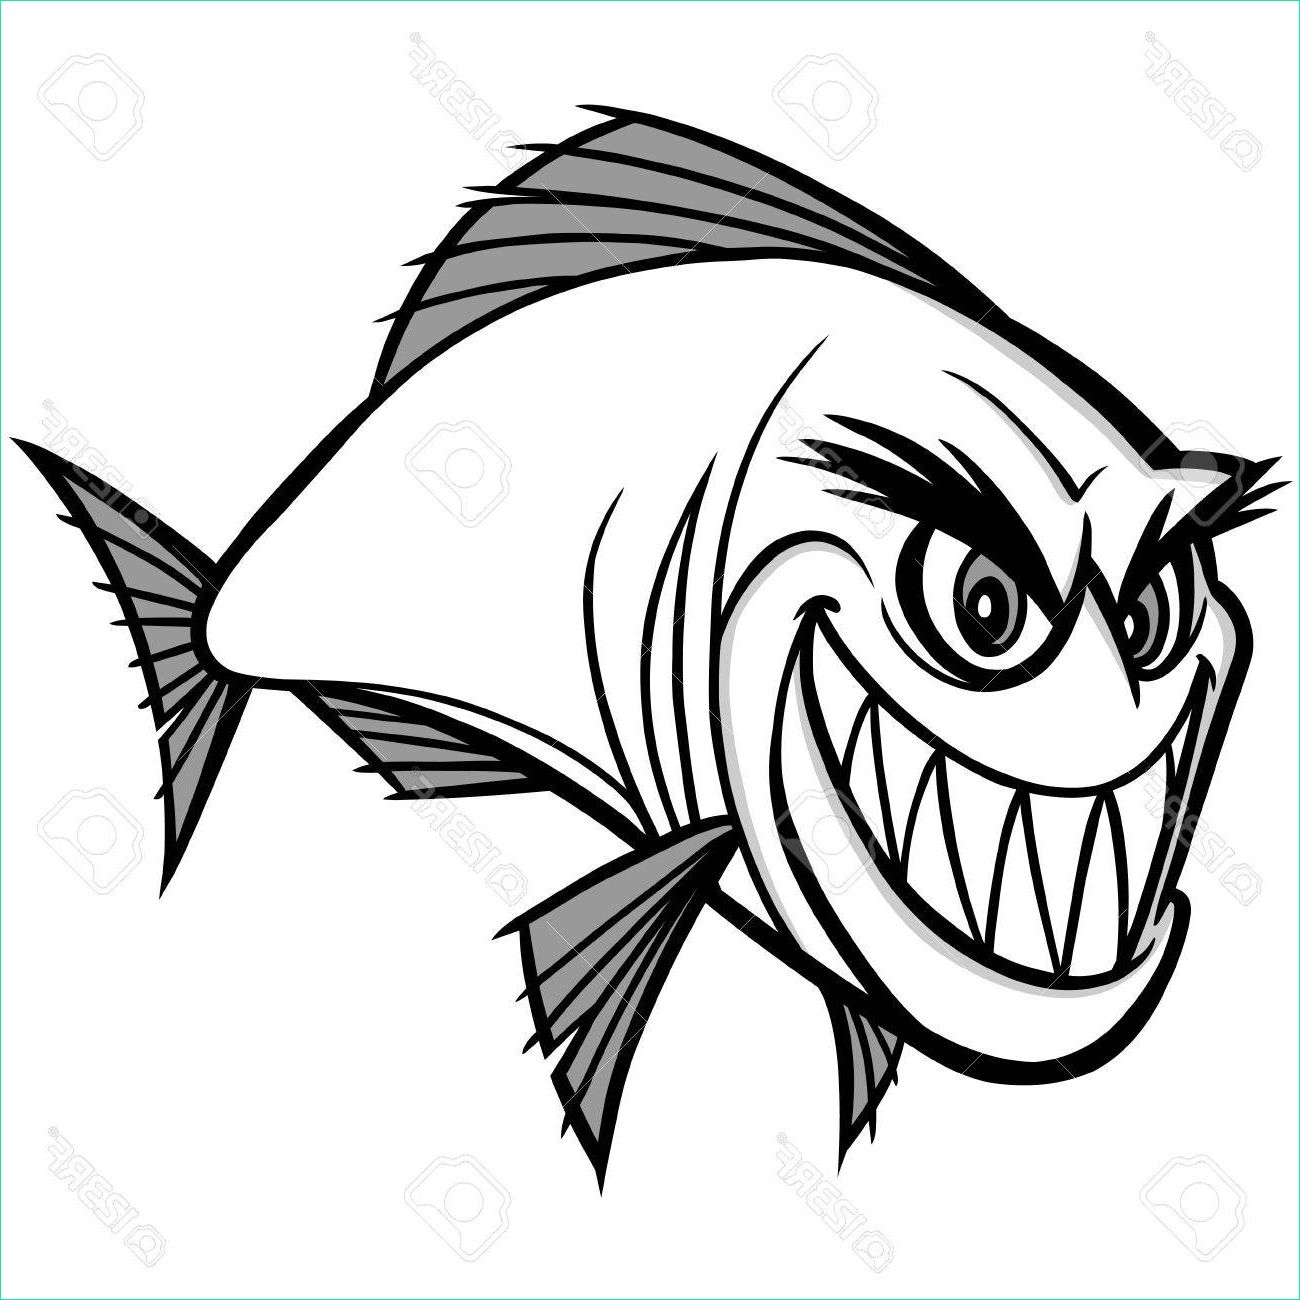 piranha drawing